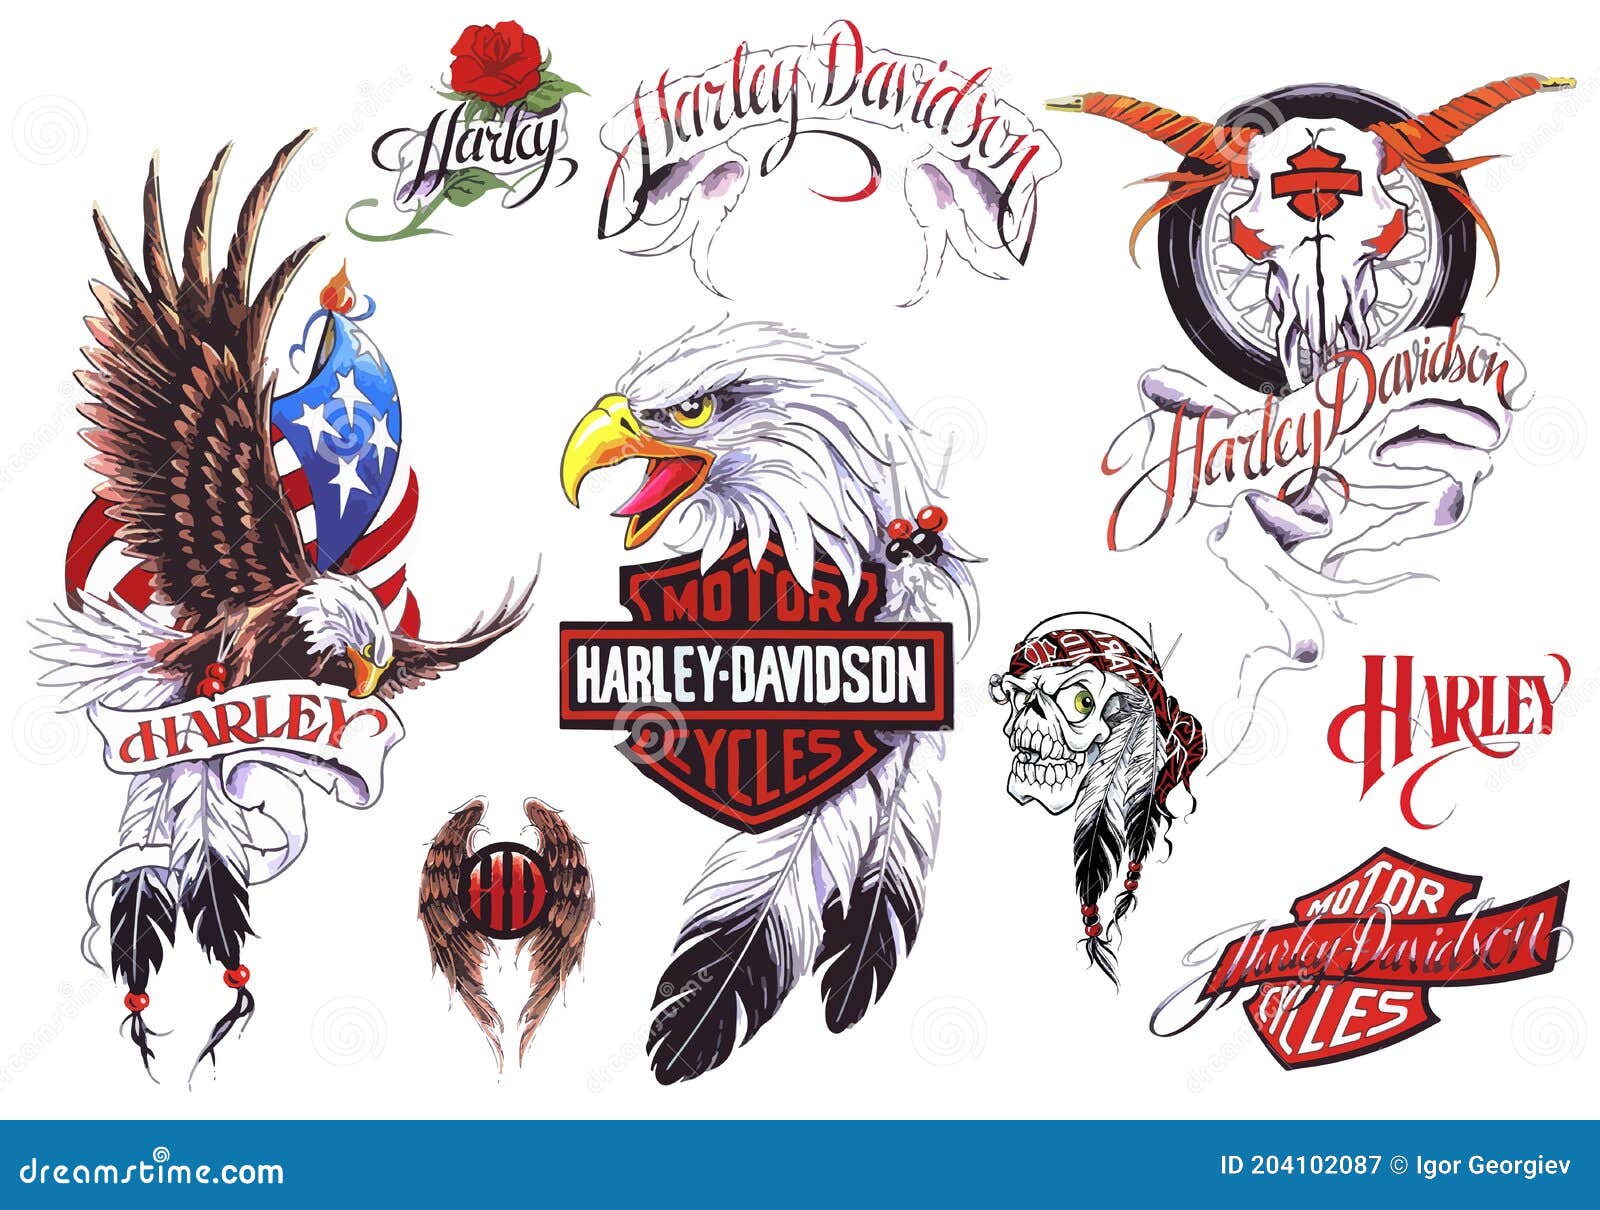 90 Harley Davidson Tattoos For Men  Manly Motorcycle Designs  Harley  davidson tattoos Harley tattoos Motorcycle tattoos